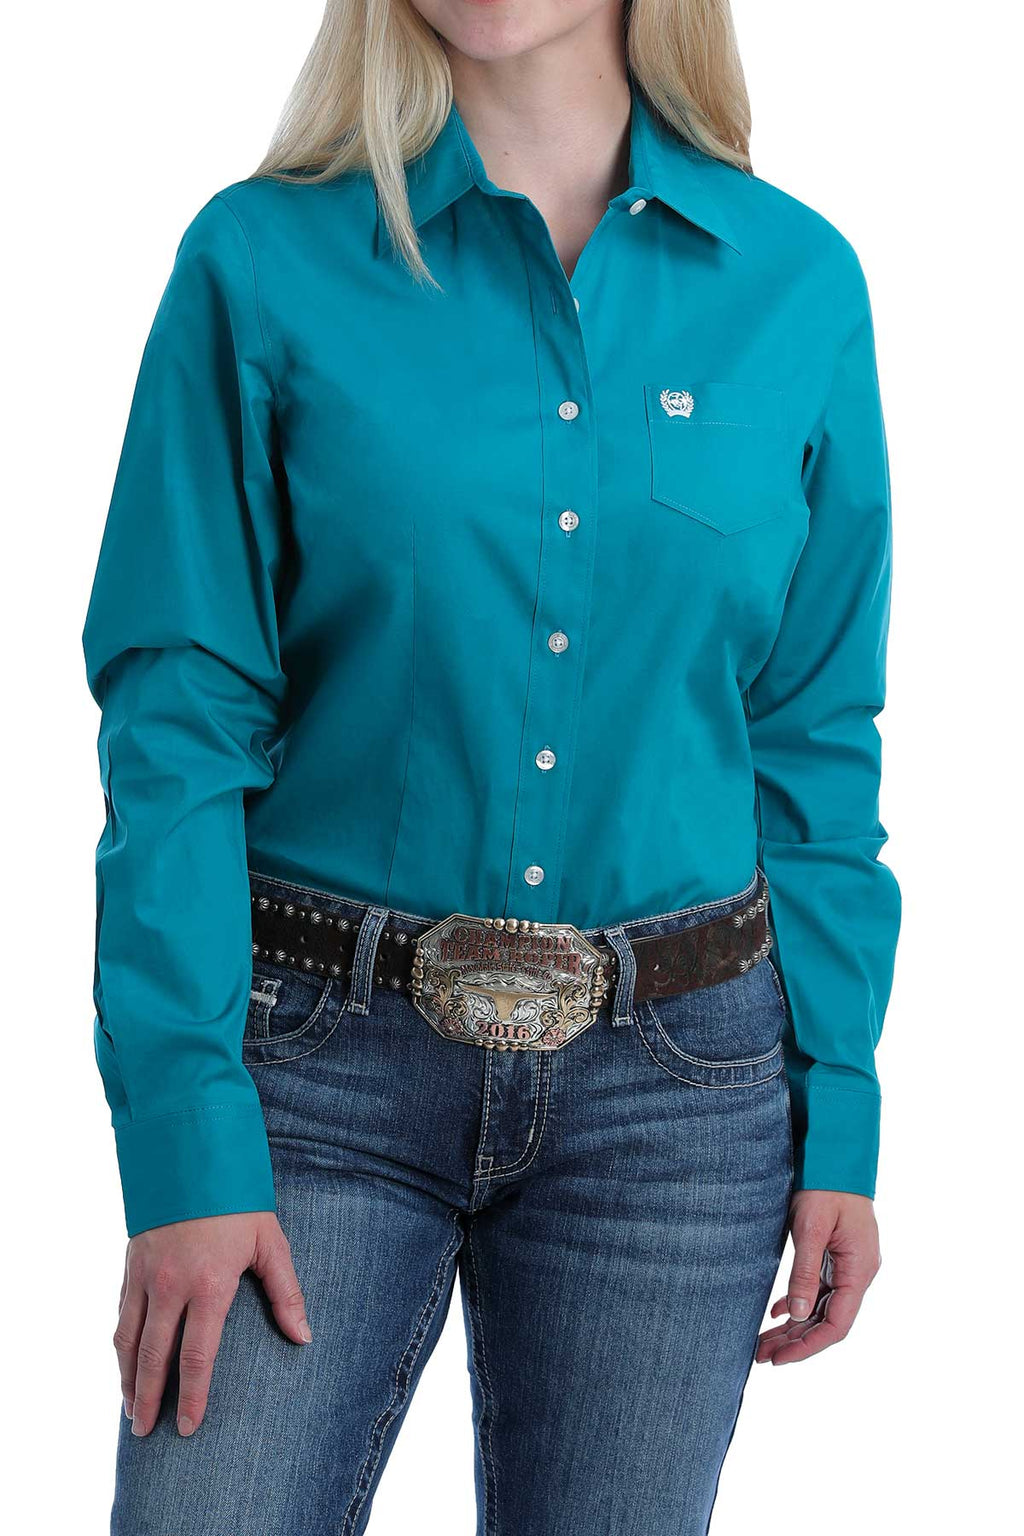 CINCH Women's Stretch Solid Teal Button-Down Western Shirt